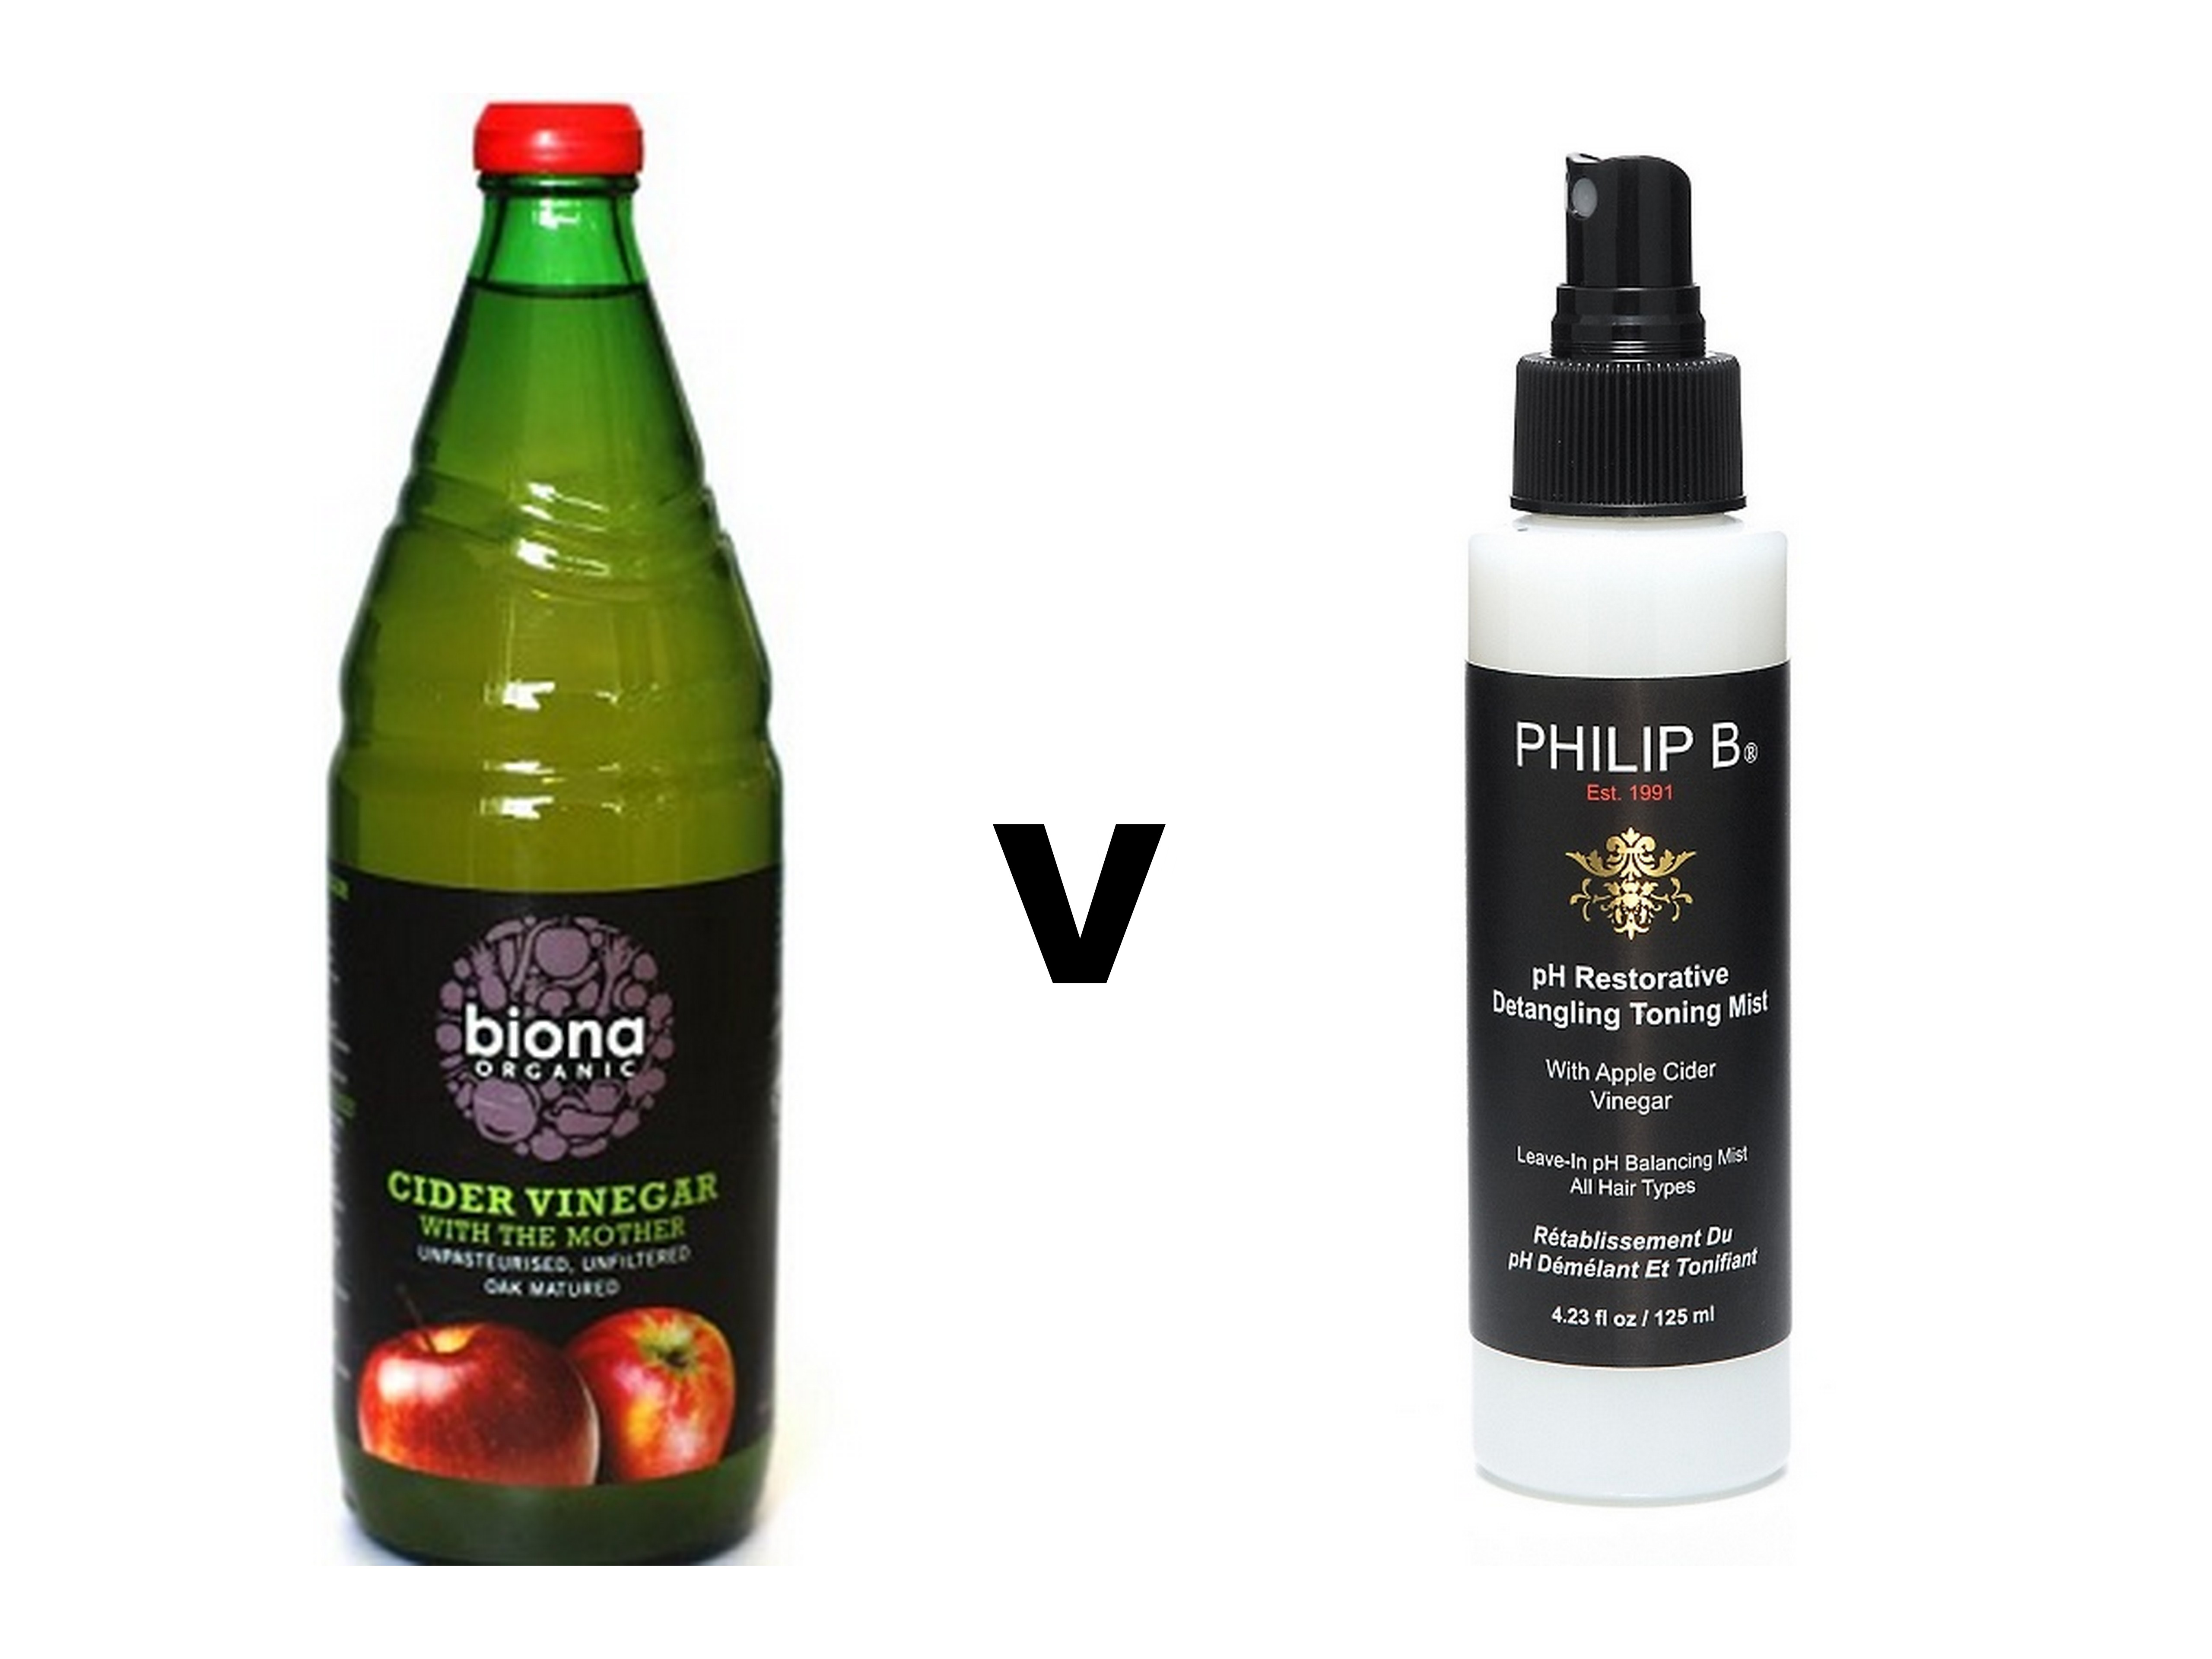 does apple cider vinegar clarify hair